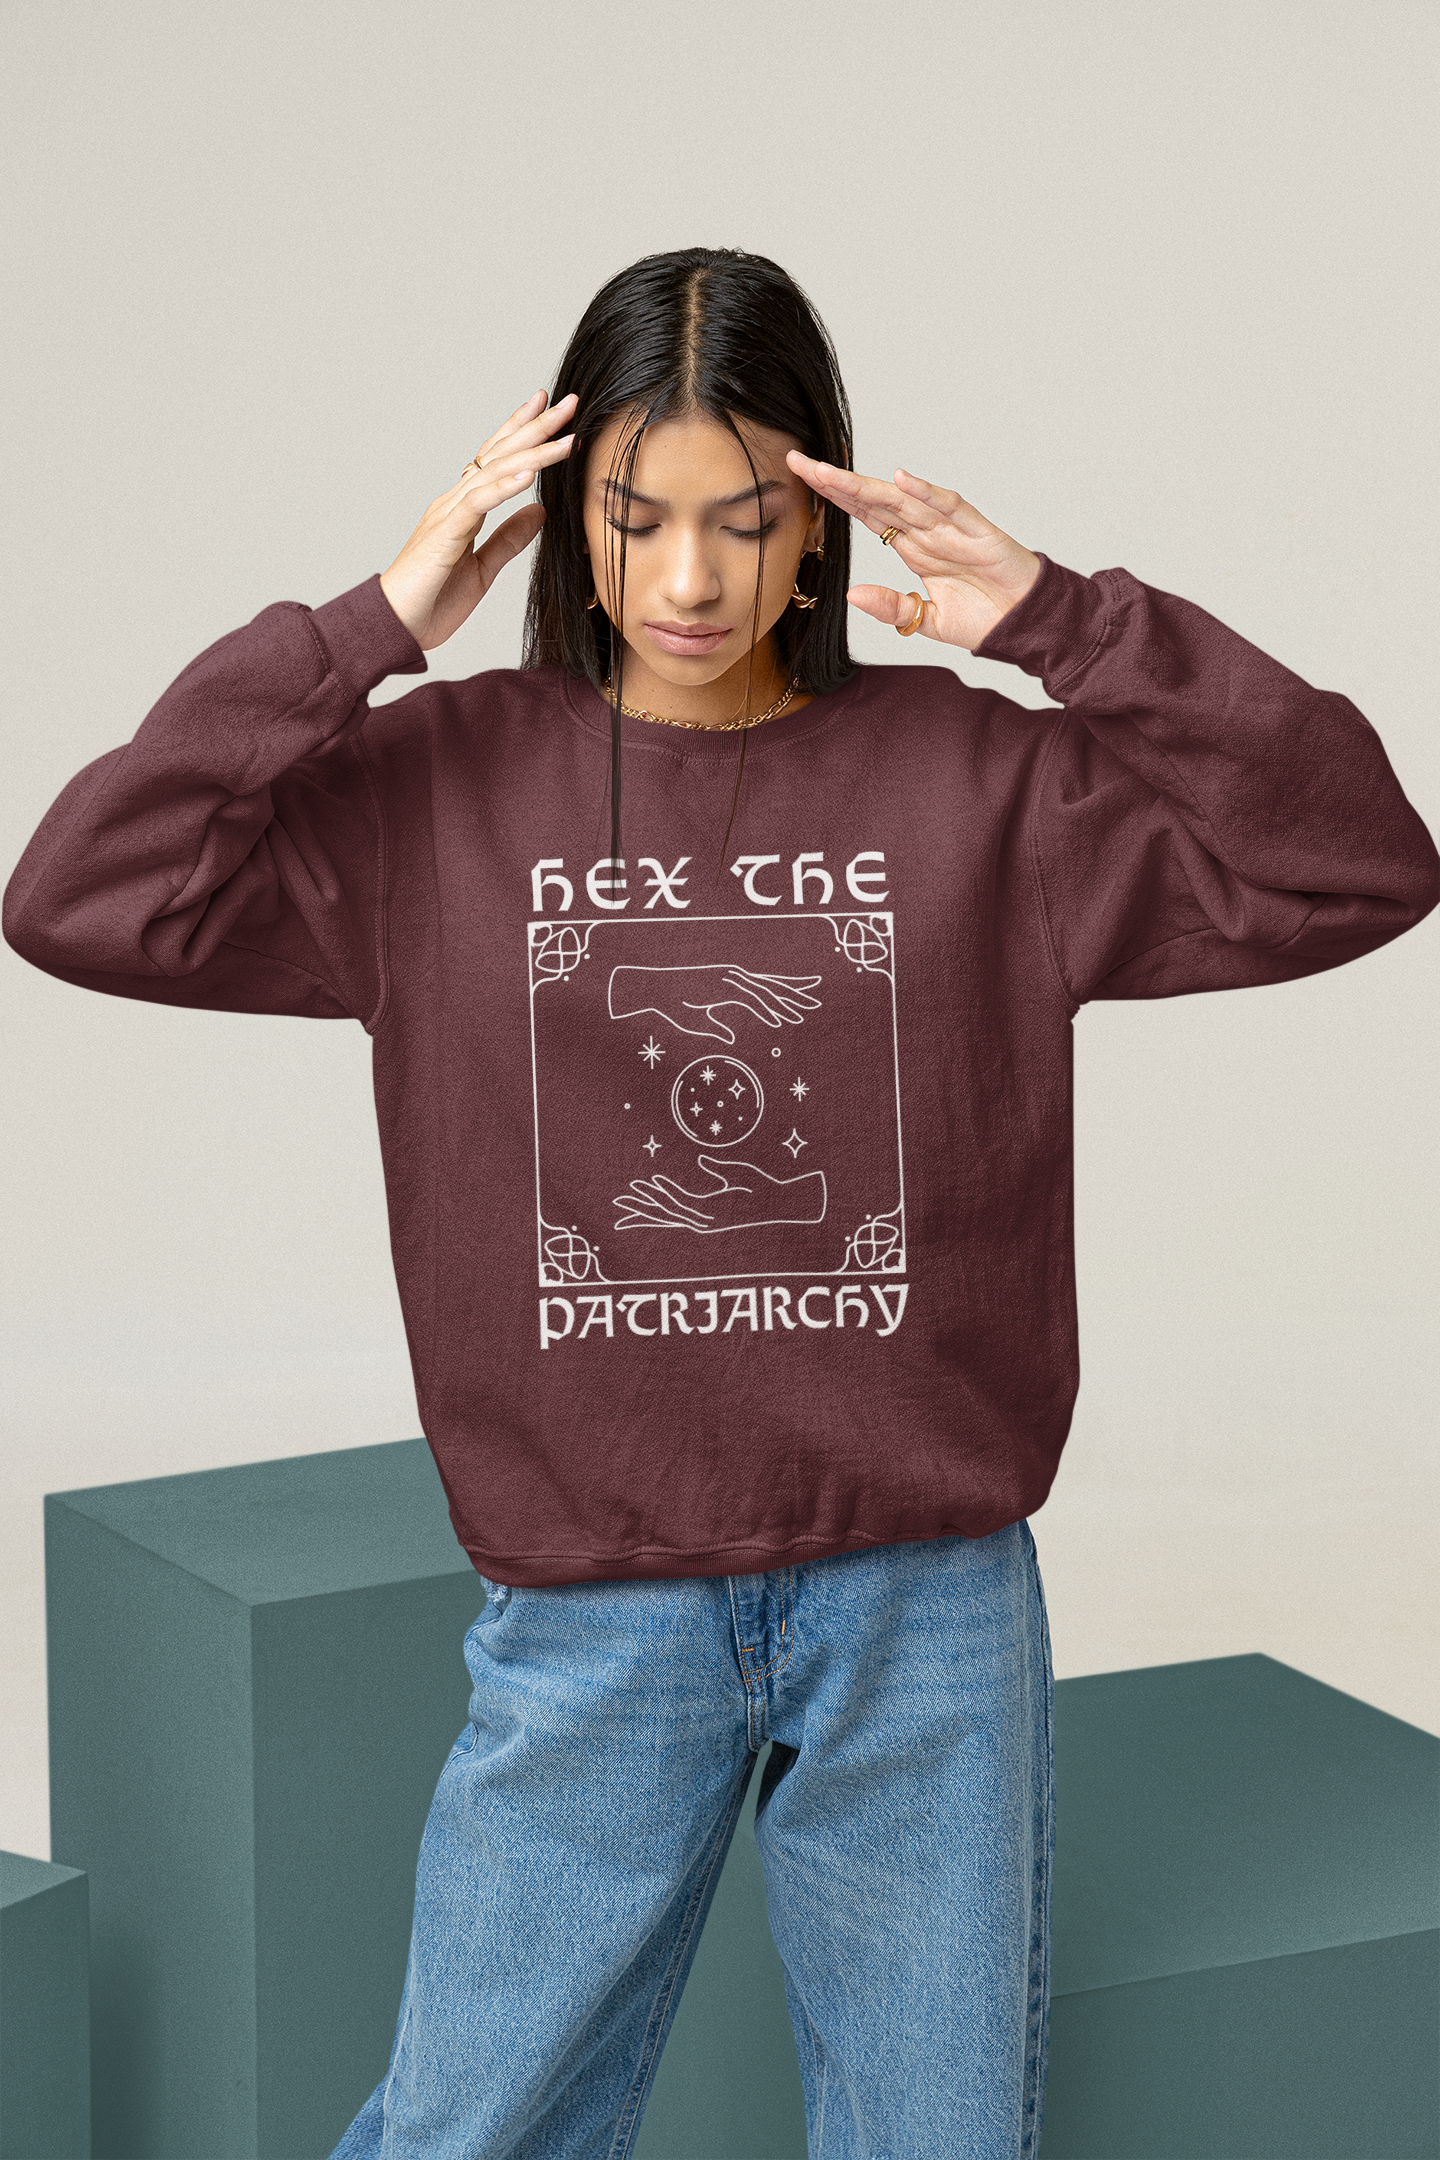 Hex the Patriarchy Card Sweatshirt